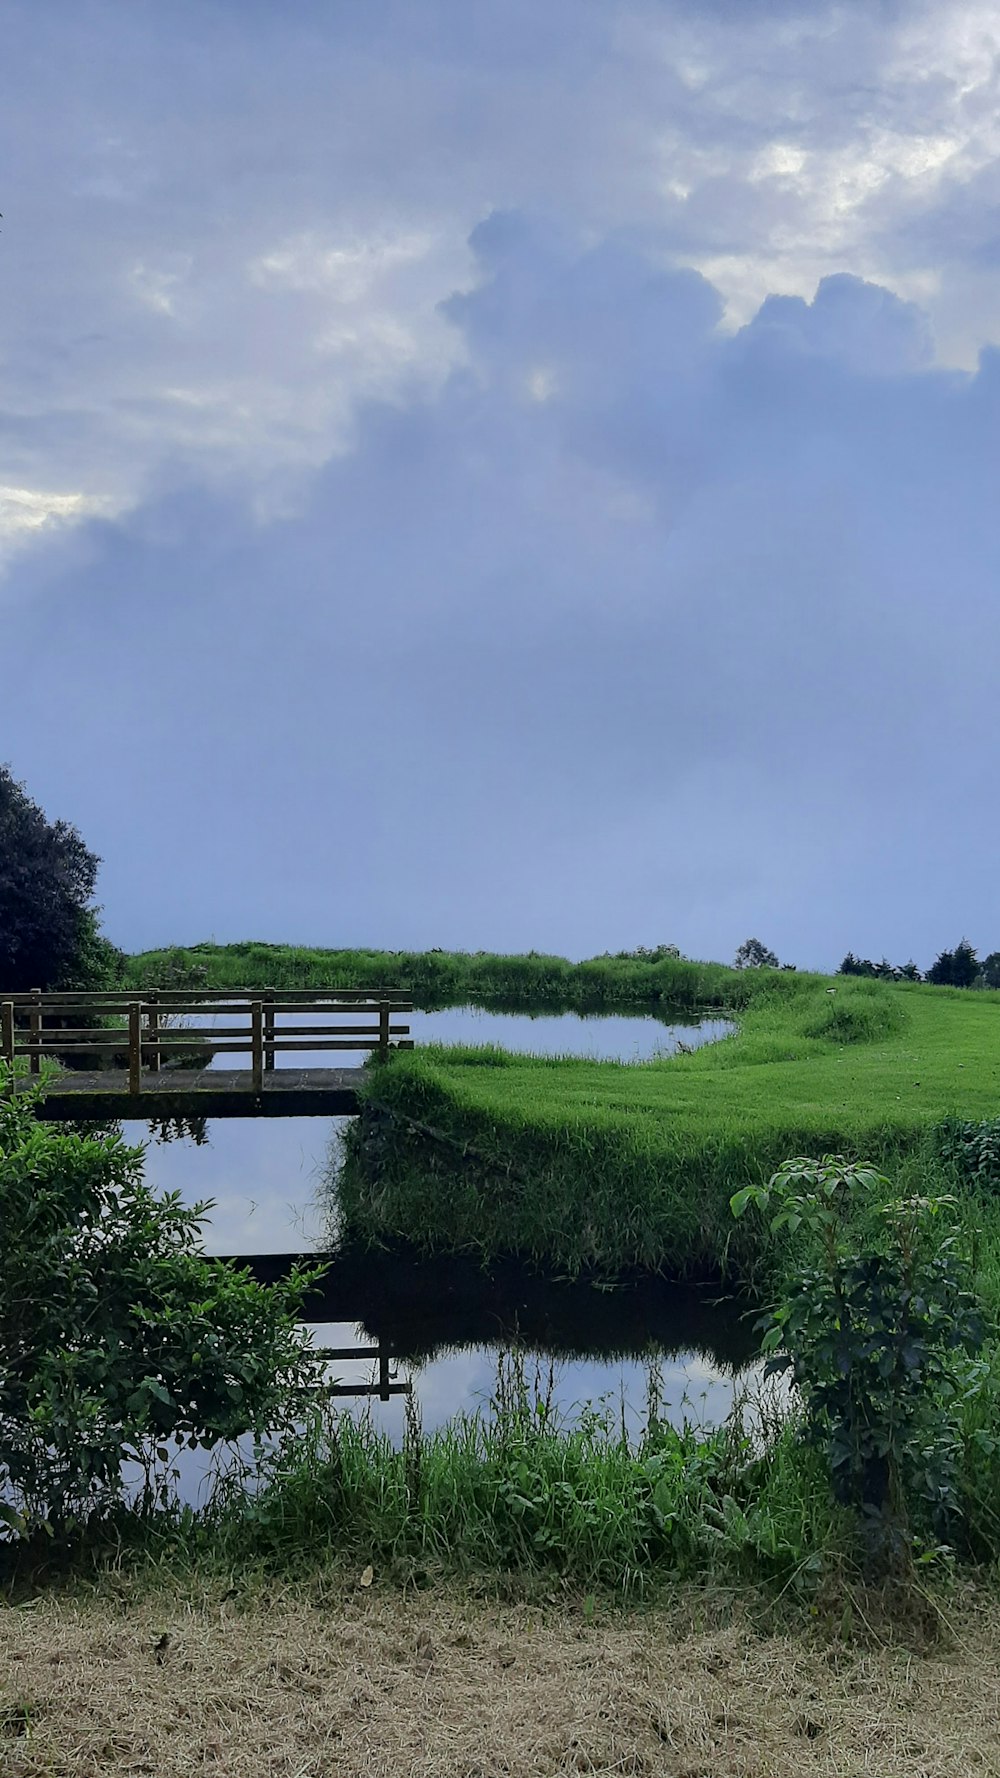 a bridge over a body of water near a lush green field